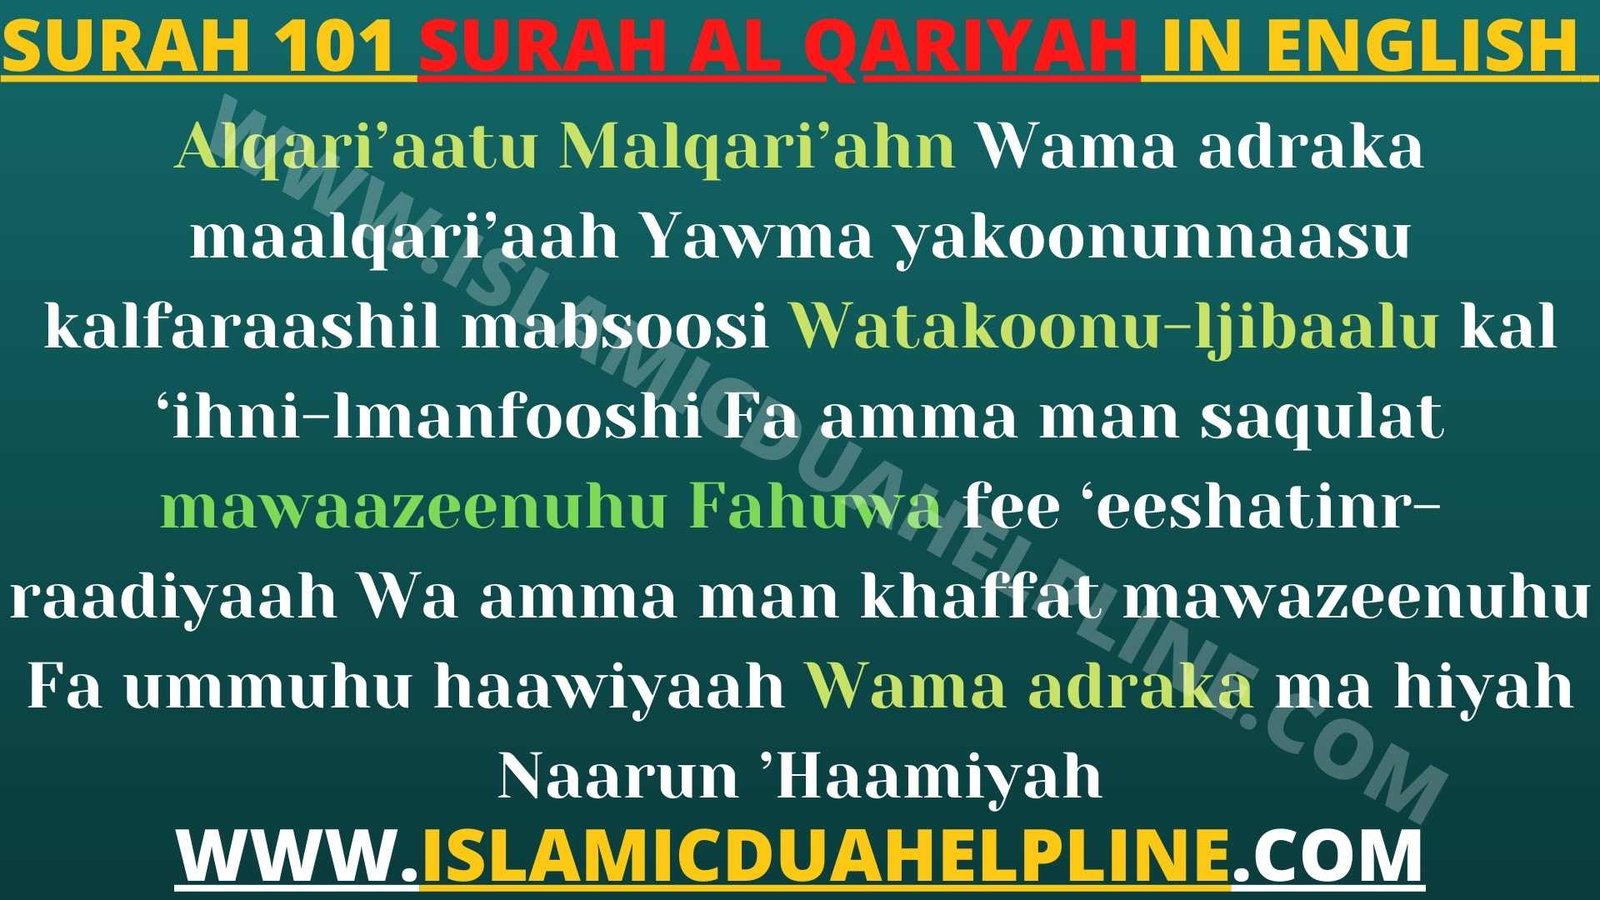 Surah 101 Surah Al-Qari’ah in English